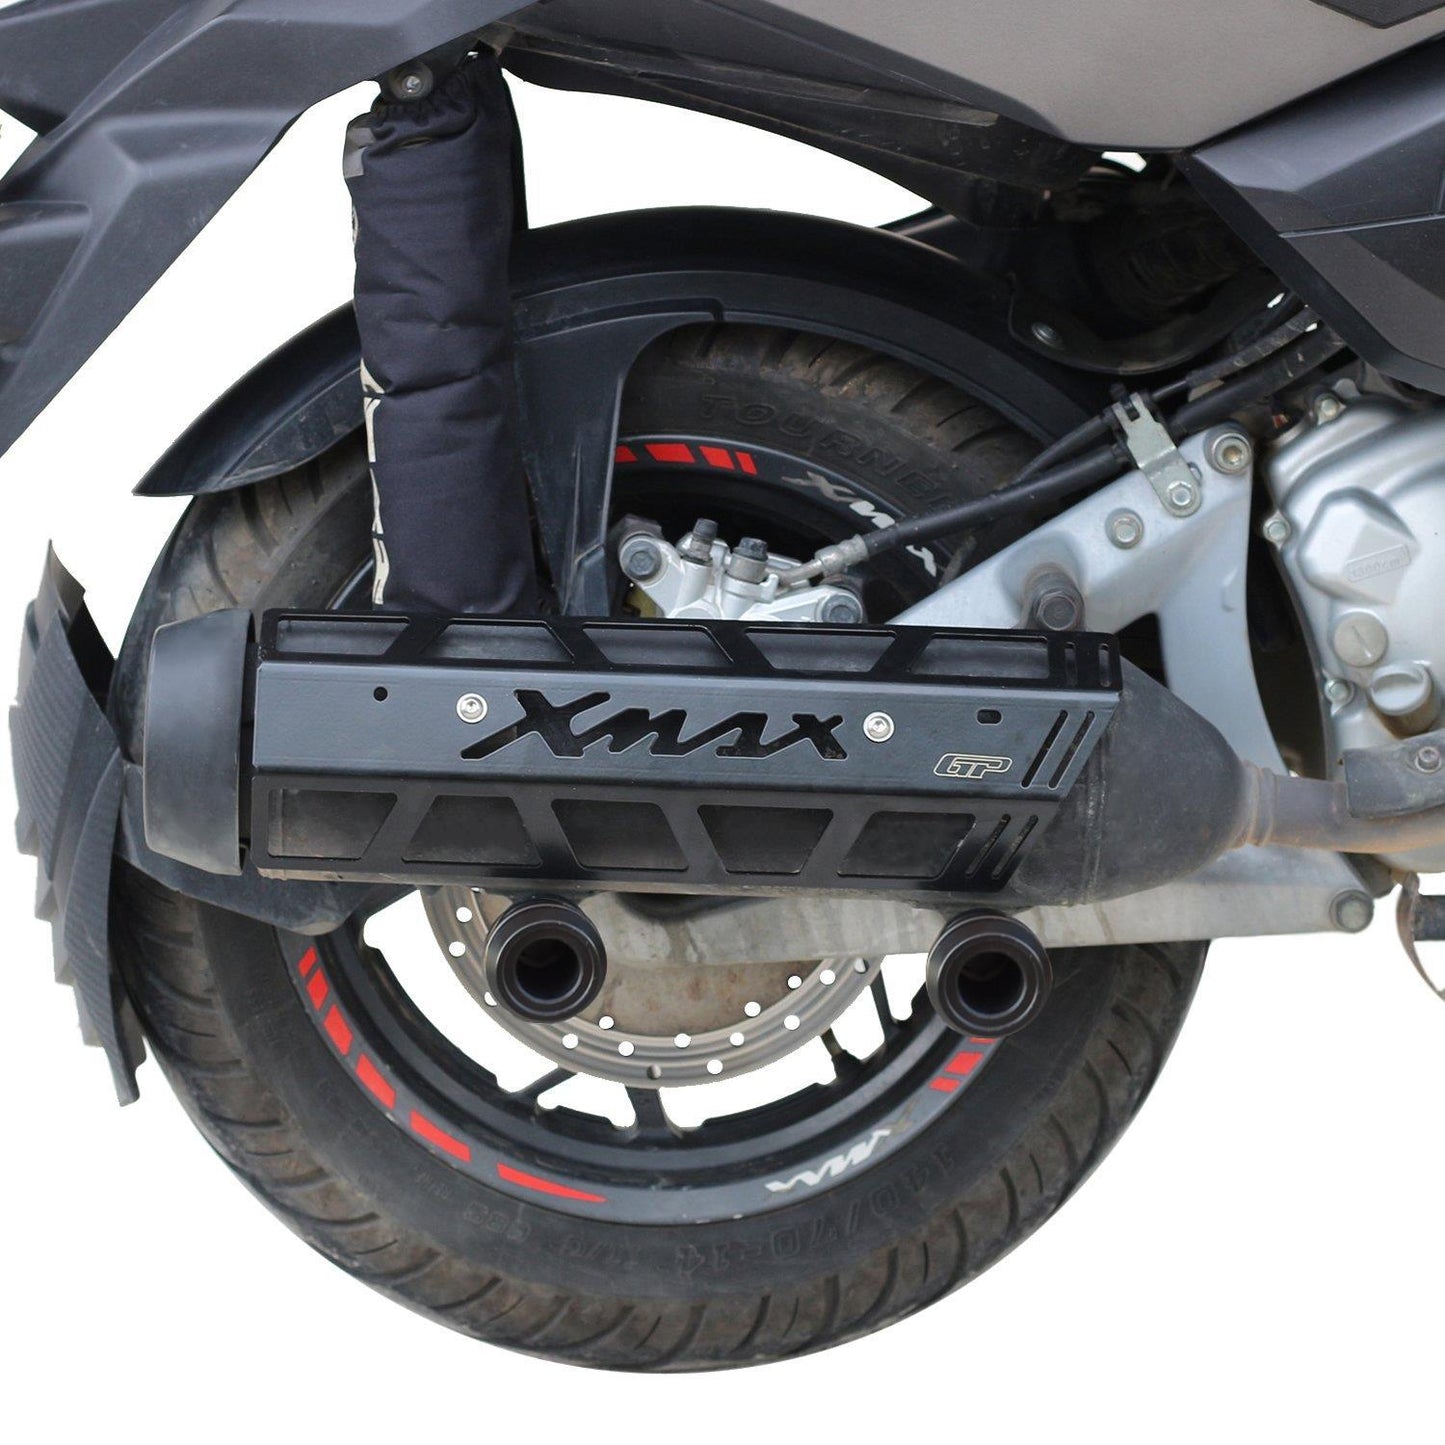 Yamaha XMAX 250 exhaust guard protection 10-17